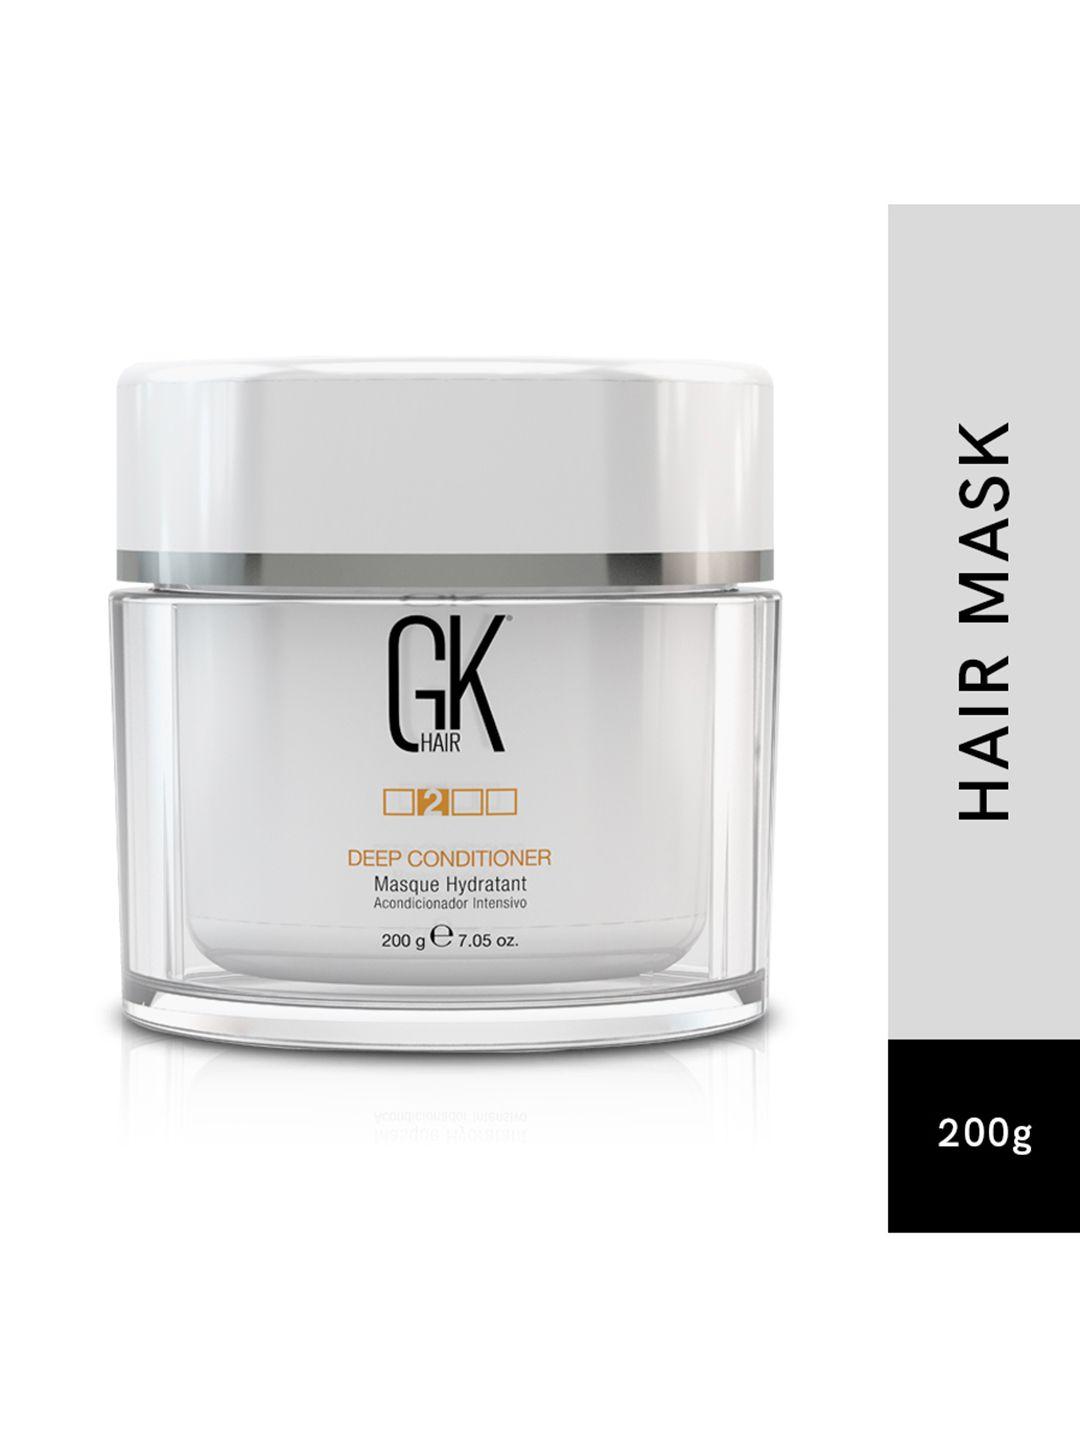 gk hair deep conditioner global keratin hair masque 200g